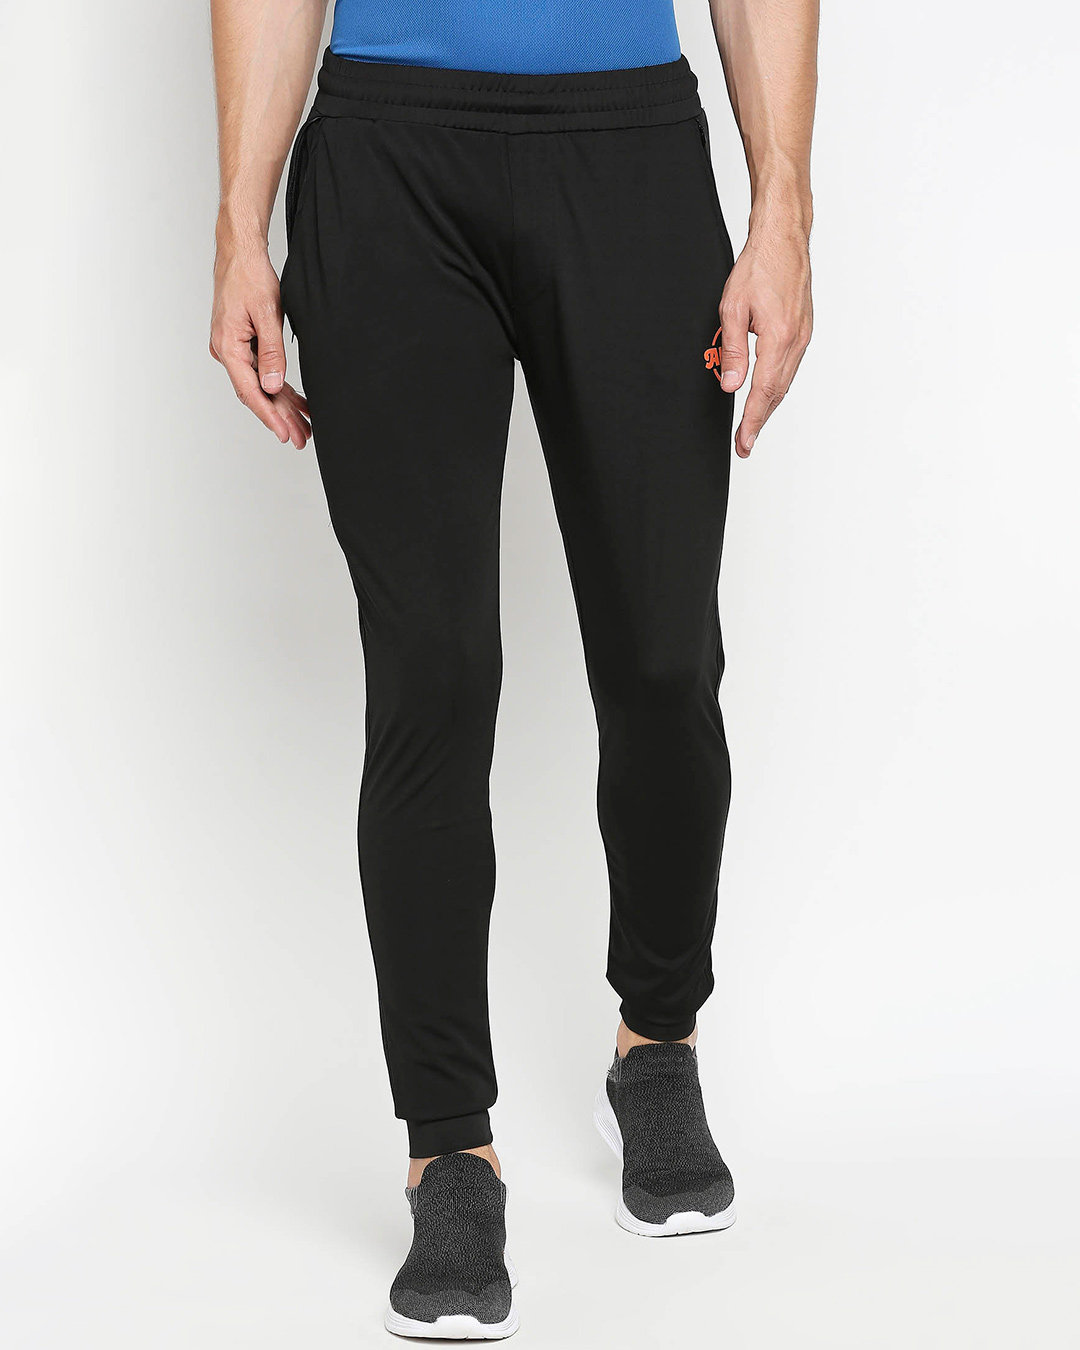 Buy Men's Black Solid Regular Fit Track Pants Online at Bewakoof